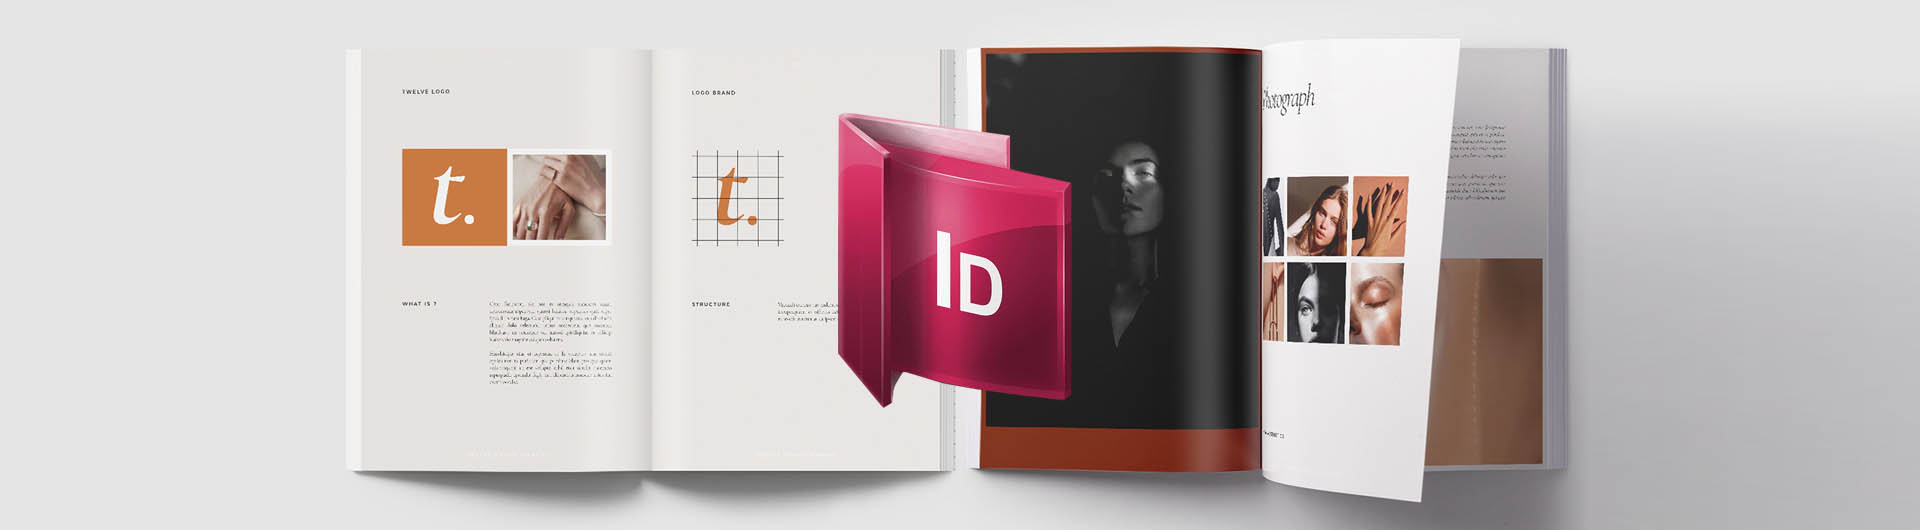 InDesign Excellence - Corso Intensivo Adobe InDesign